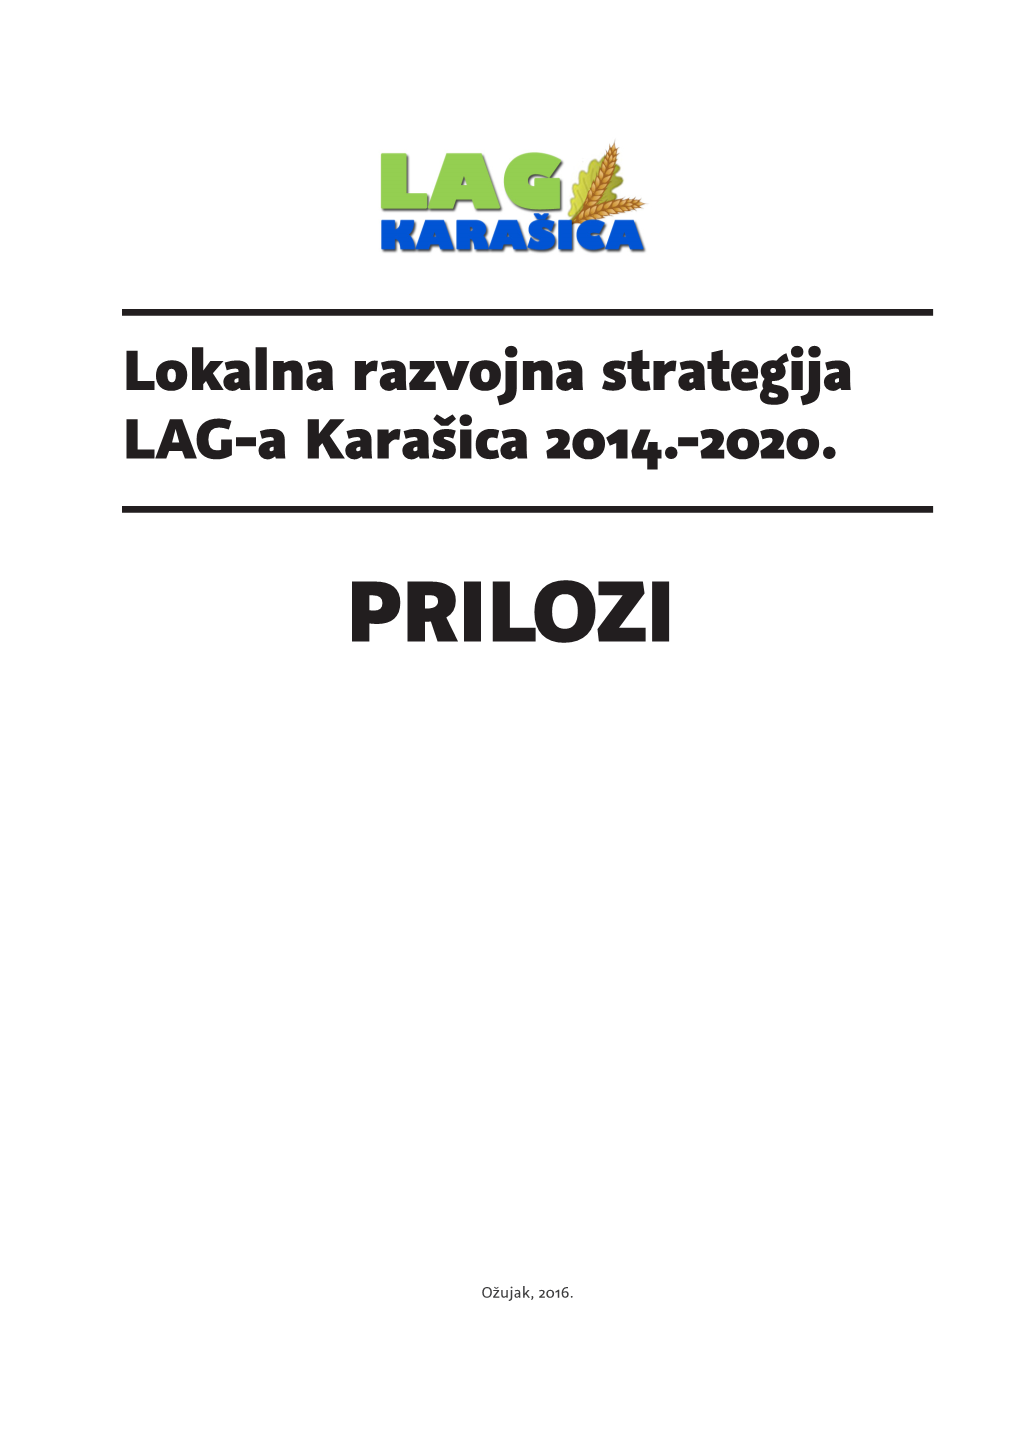 PRILOZI LRS LAG-A Karašica 2014